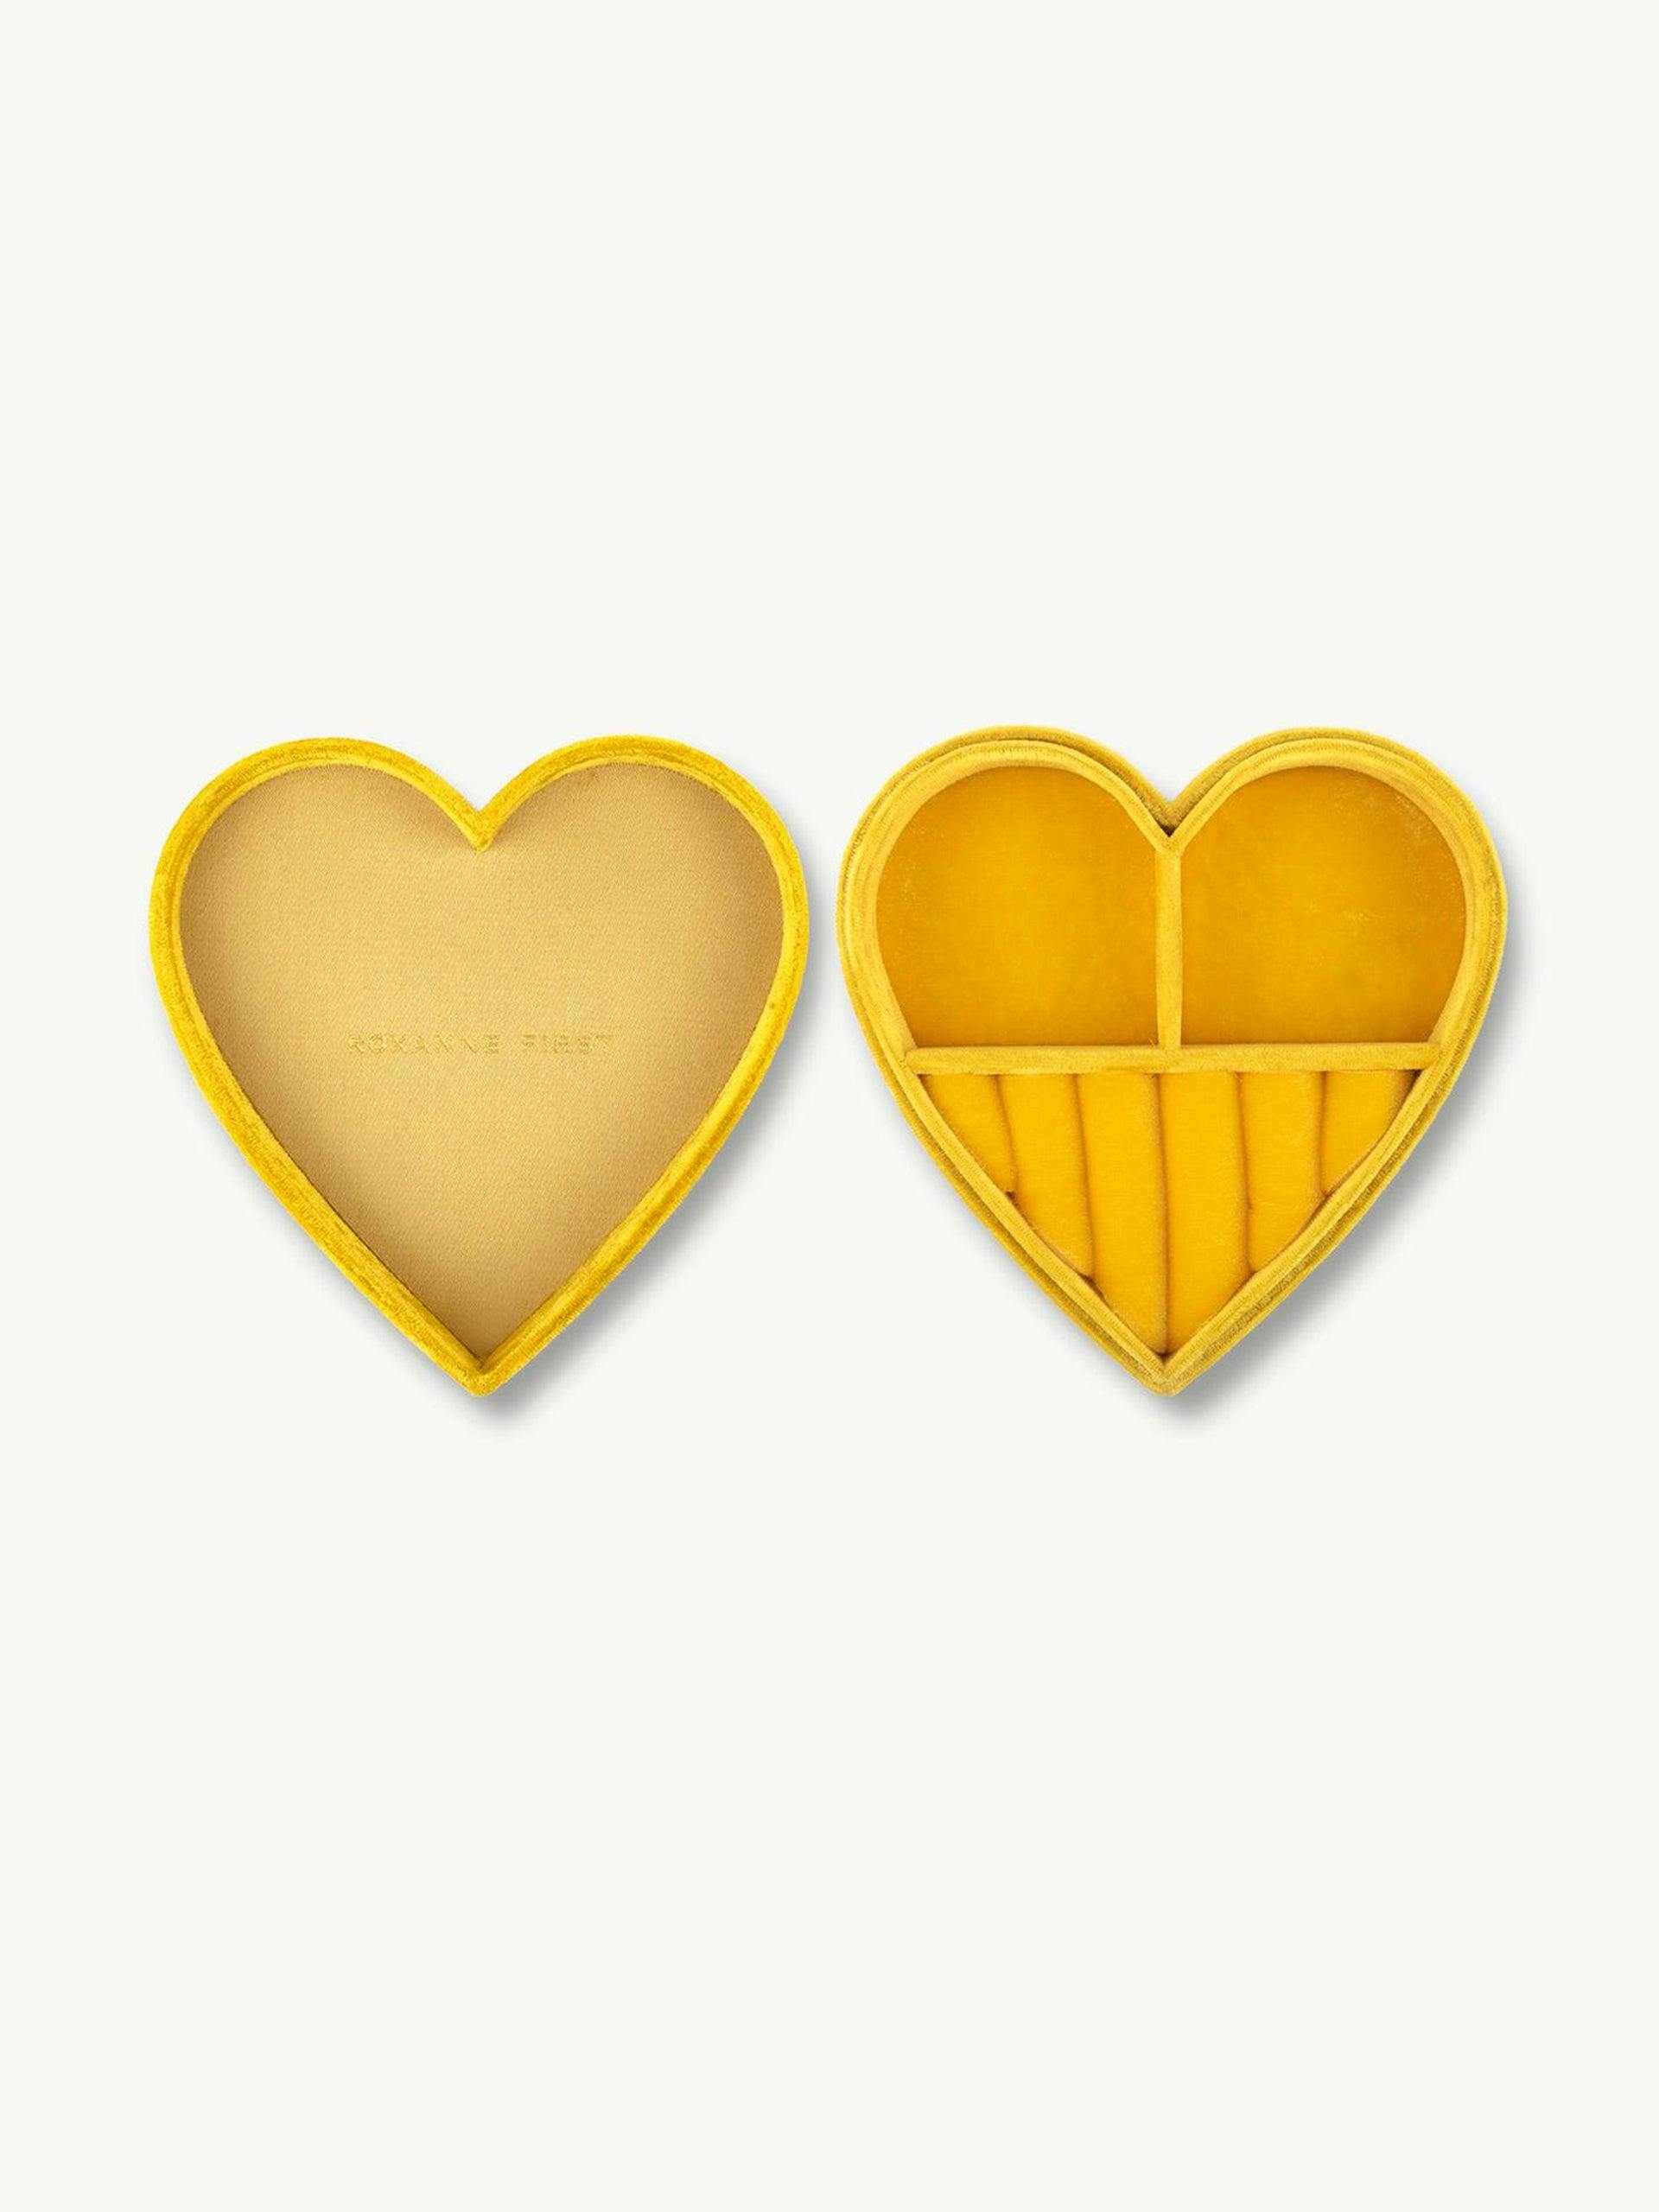 Sunshine yellow heart-shaped jewellery box